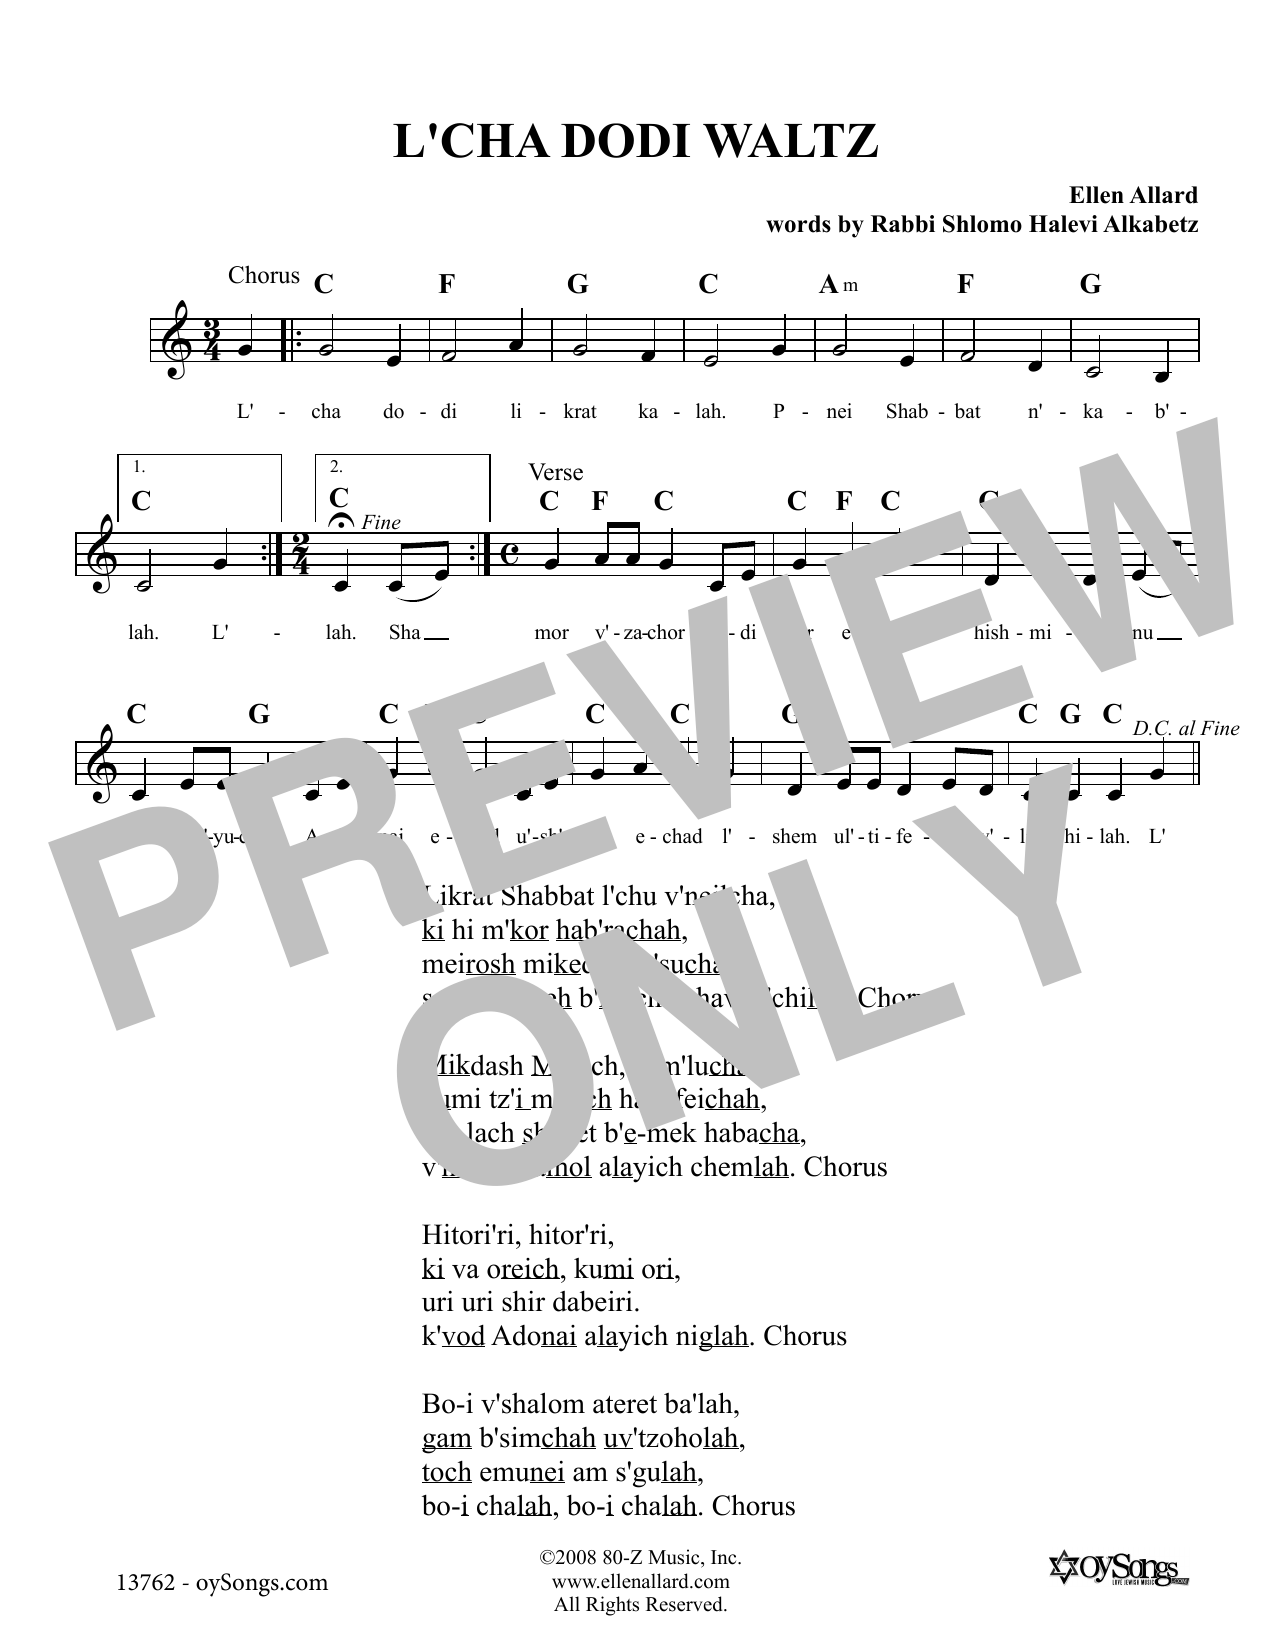 Ellen Allard L'cha Dodi Waltz Sheet Music Notes & Chords for Melody Line, Lyrics & Chords - Download or Print PDF